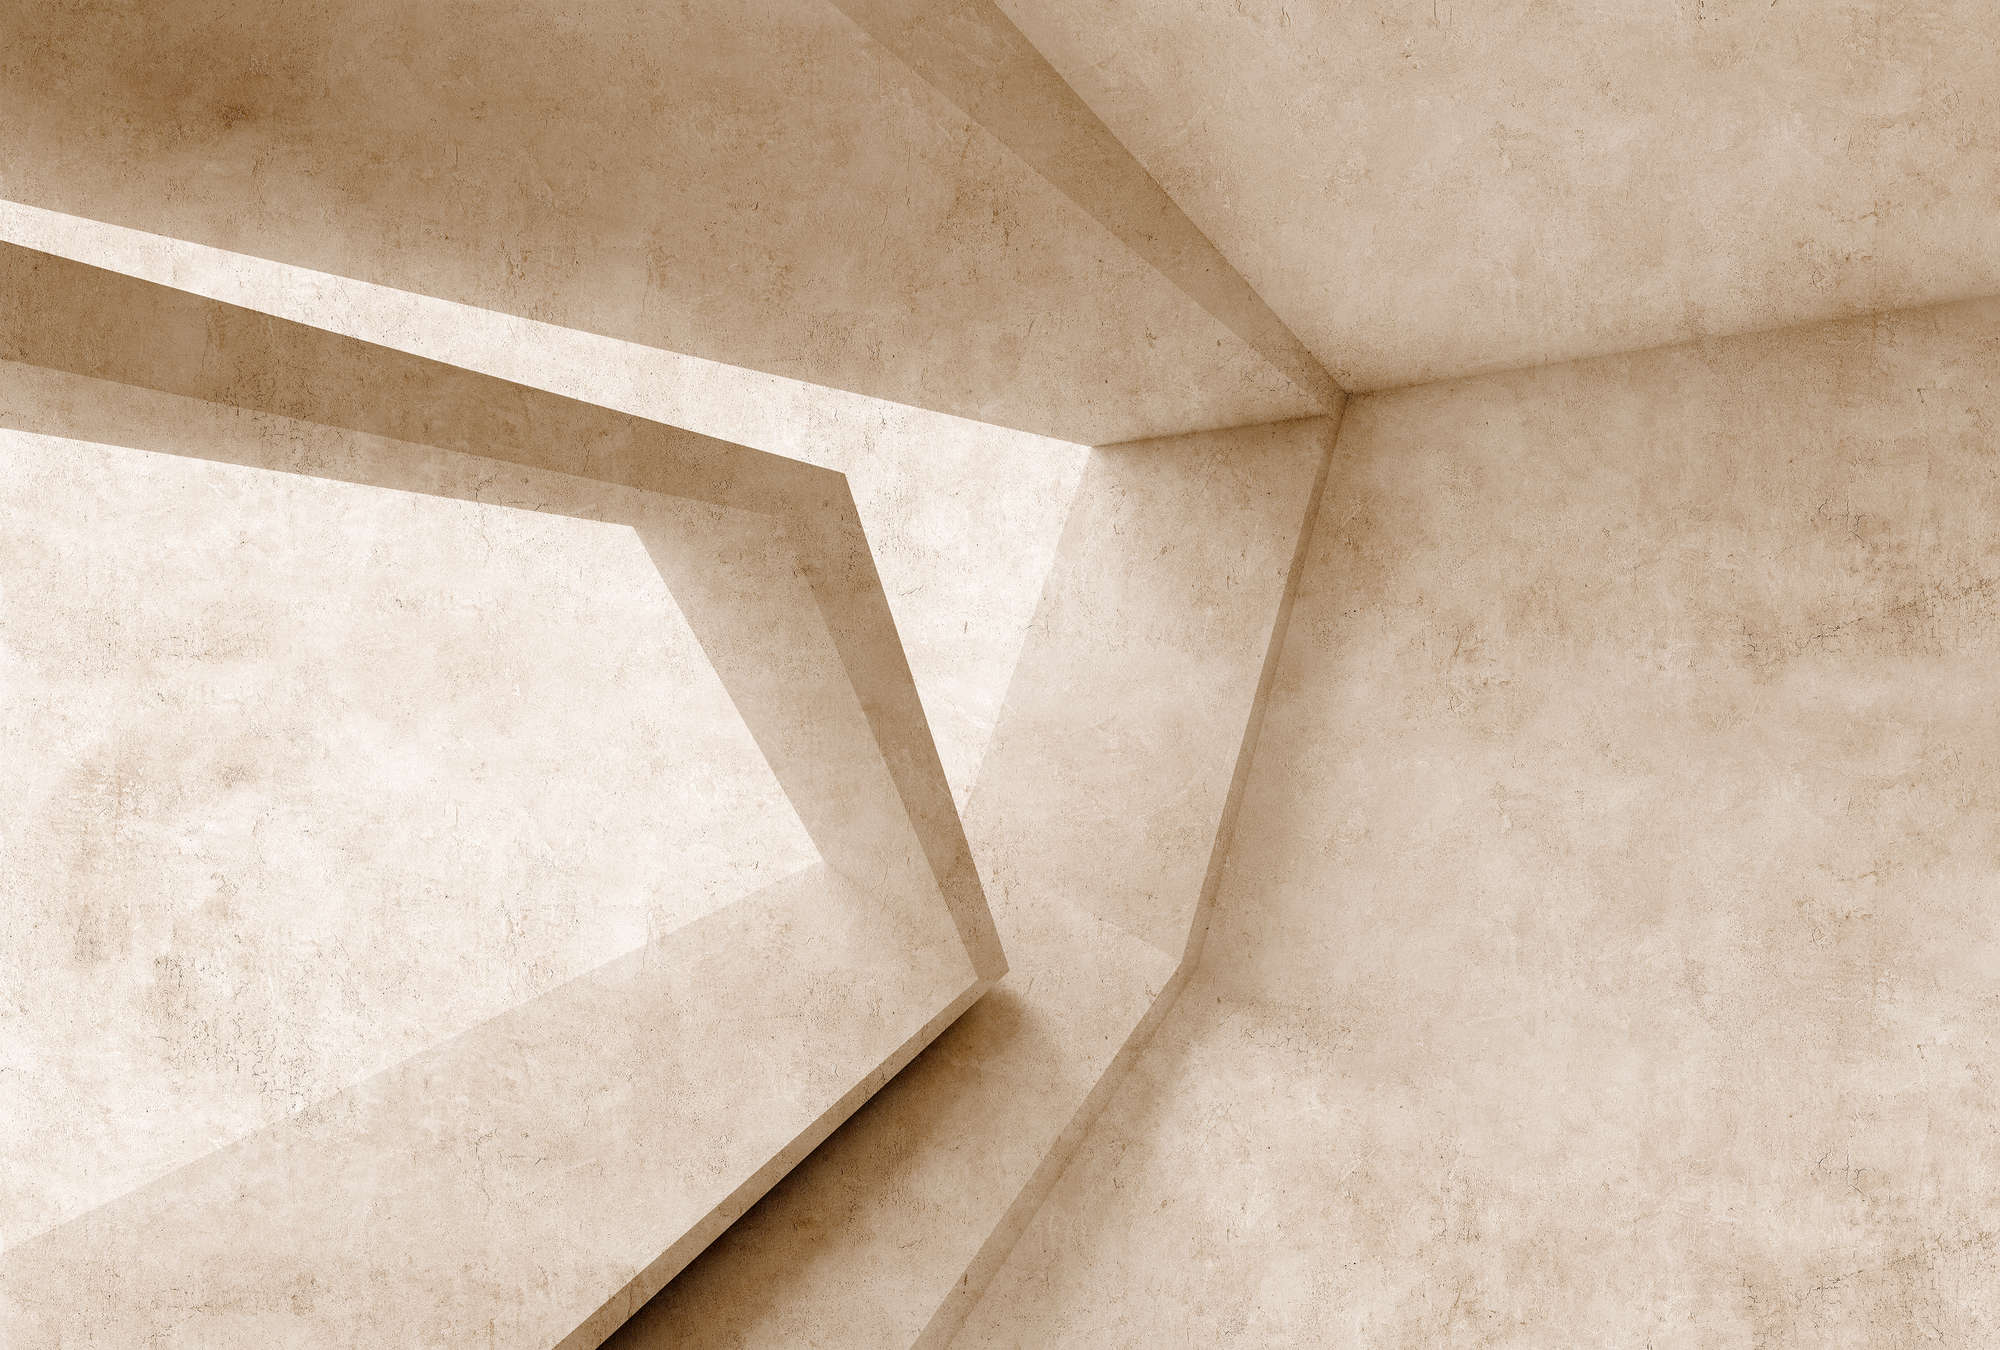             Futura 1 - concrete photo wallpaper 3D pattern
        